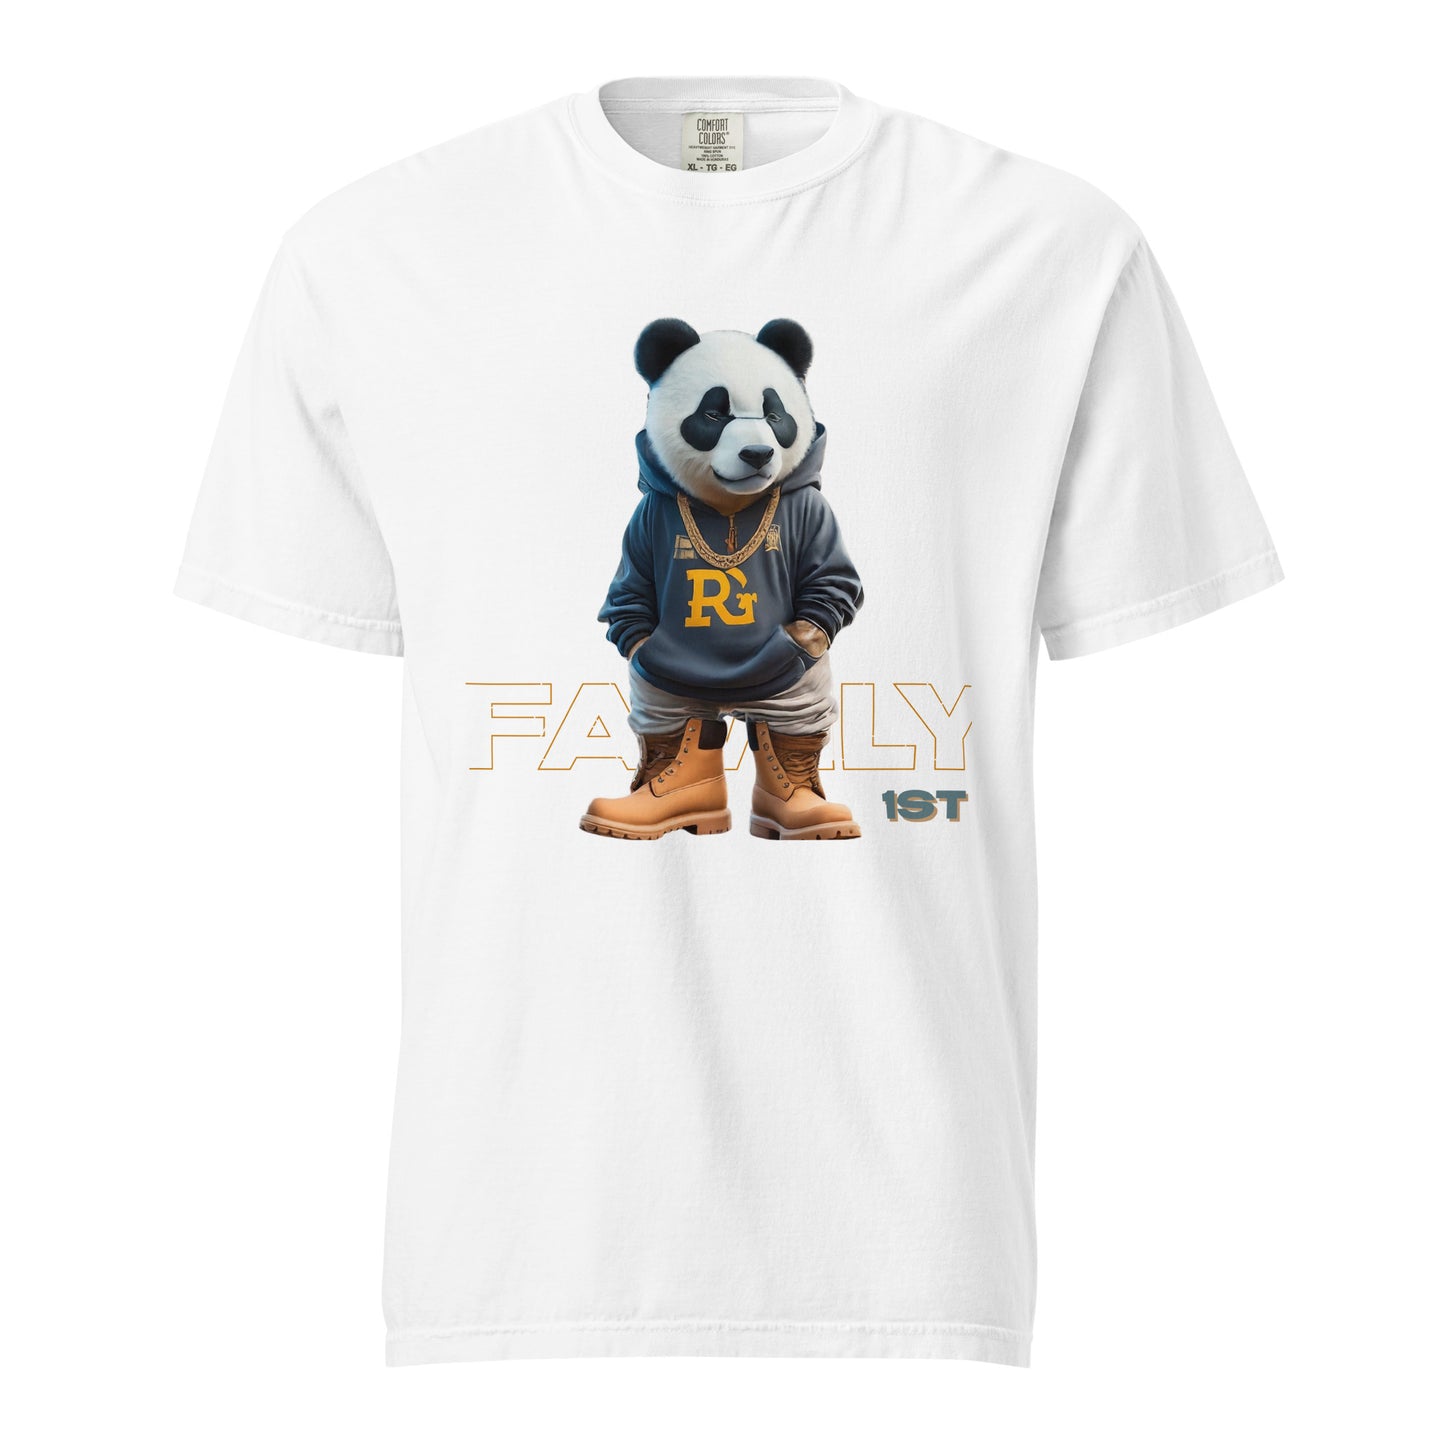 Family 1st Unisex garment-dyed heavyweight t-shirt